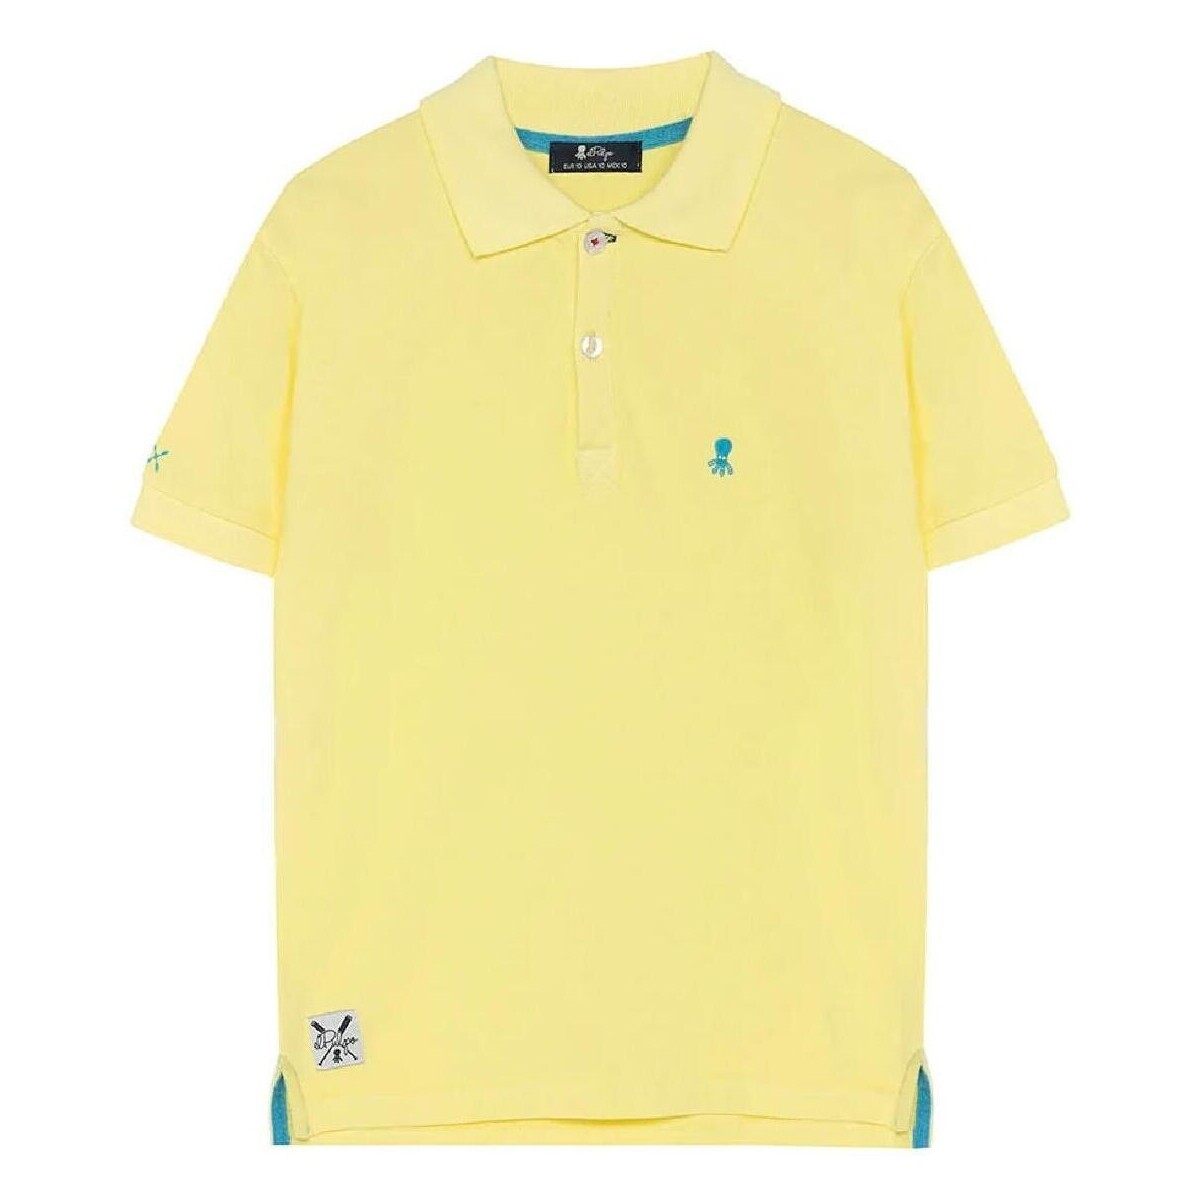 Textil Chlapecké Trička s krátkým rukávem Elpulpo  Žlutá